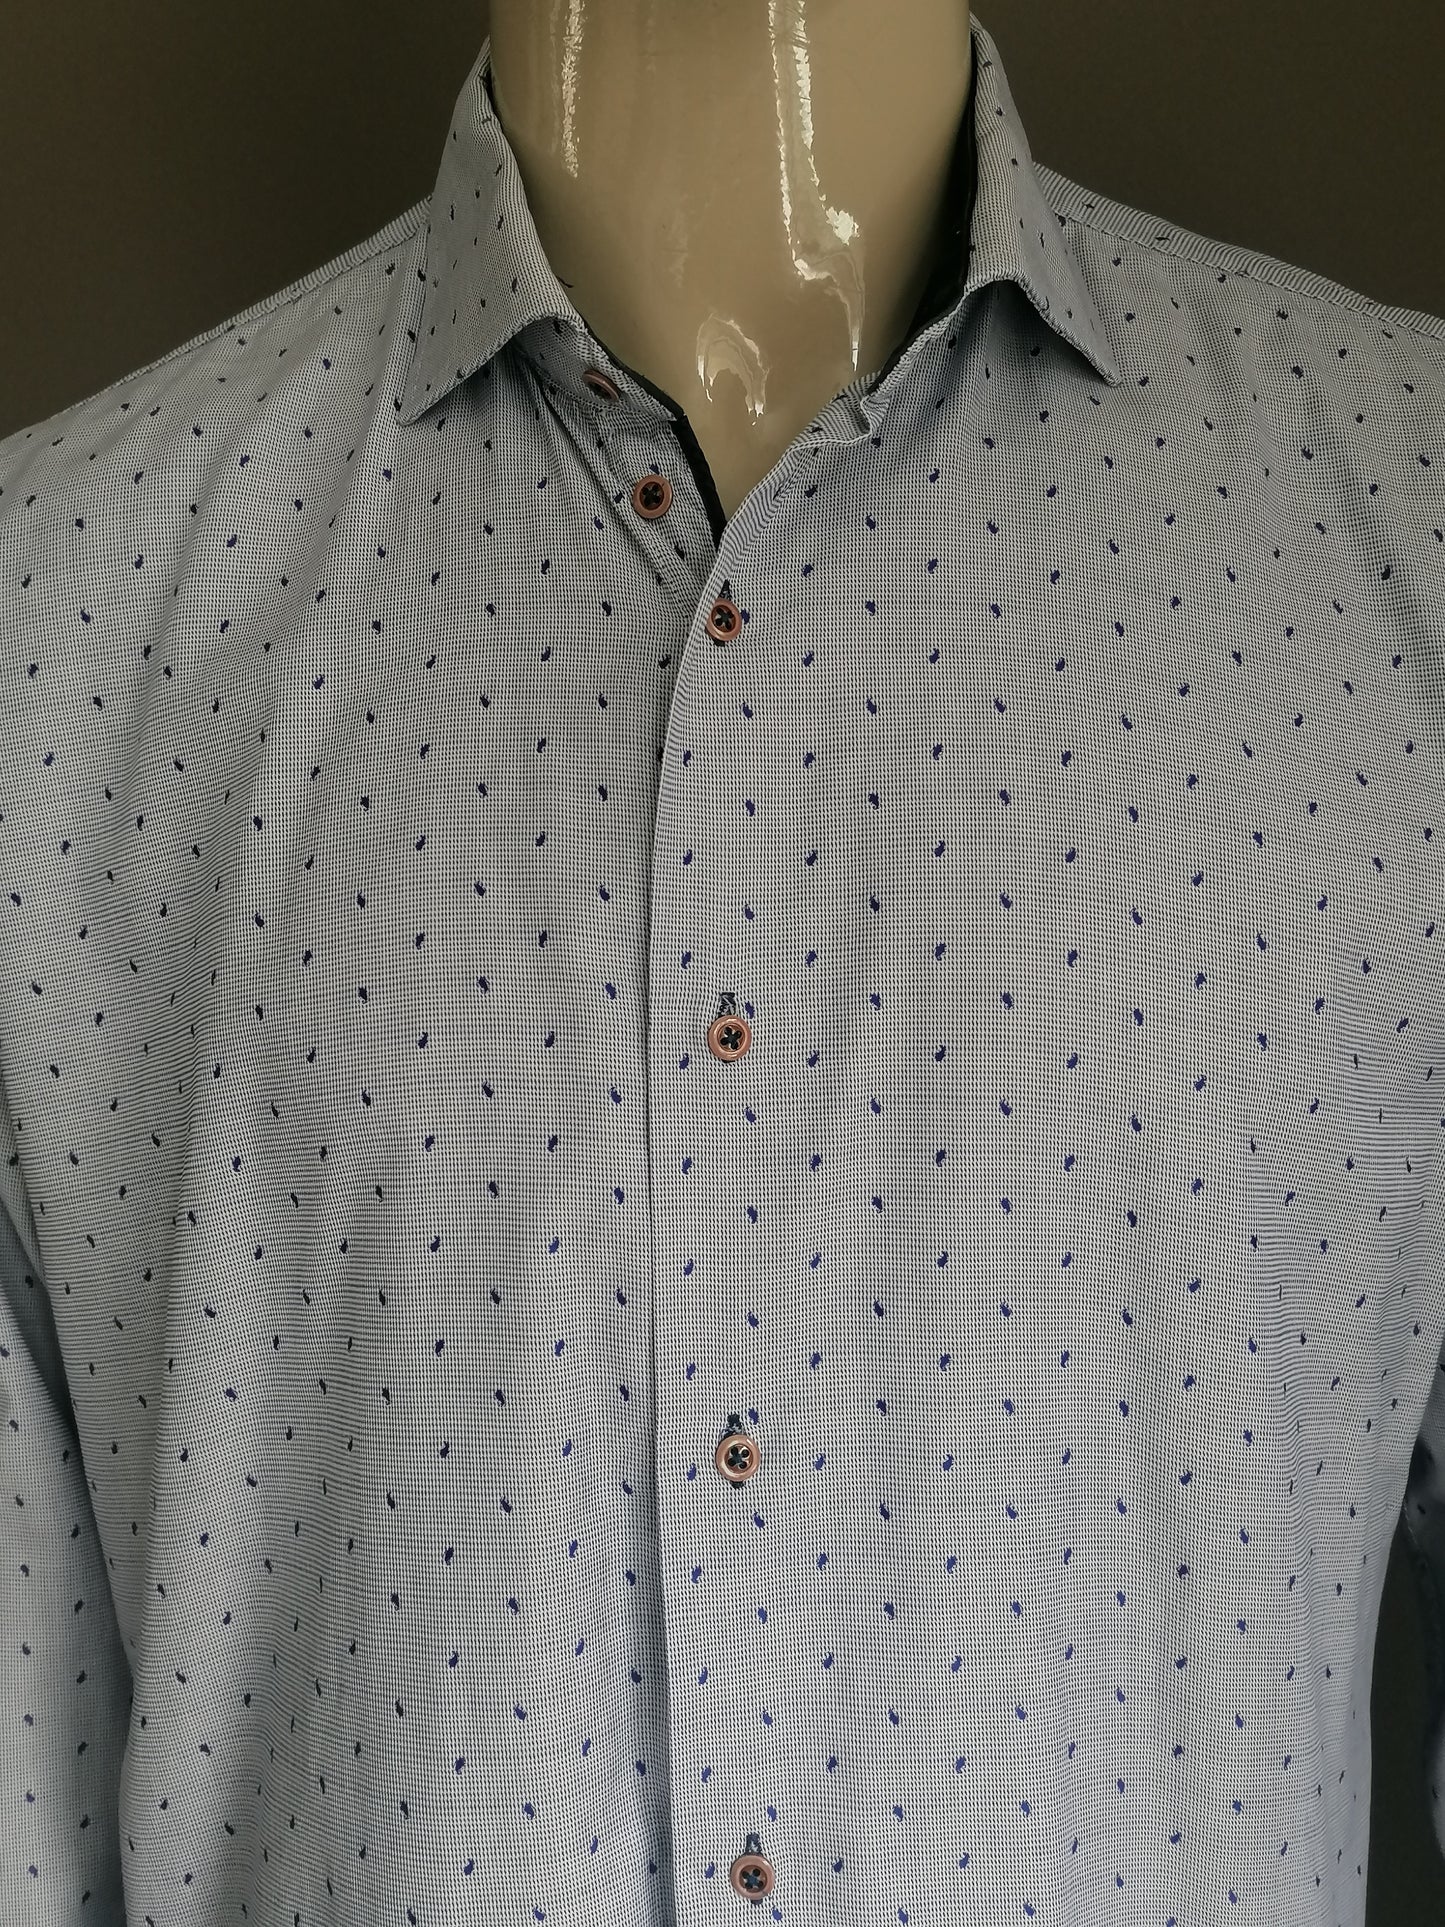 Marco Manzini overhemd. Blauw Witte print. Maat XL.